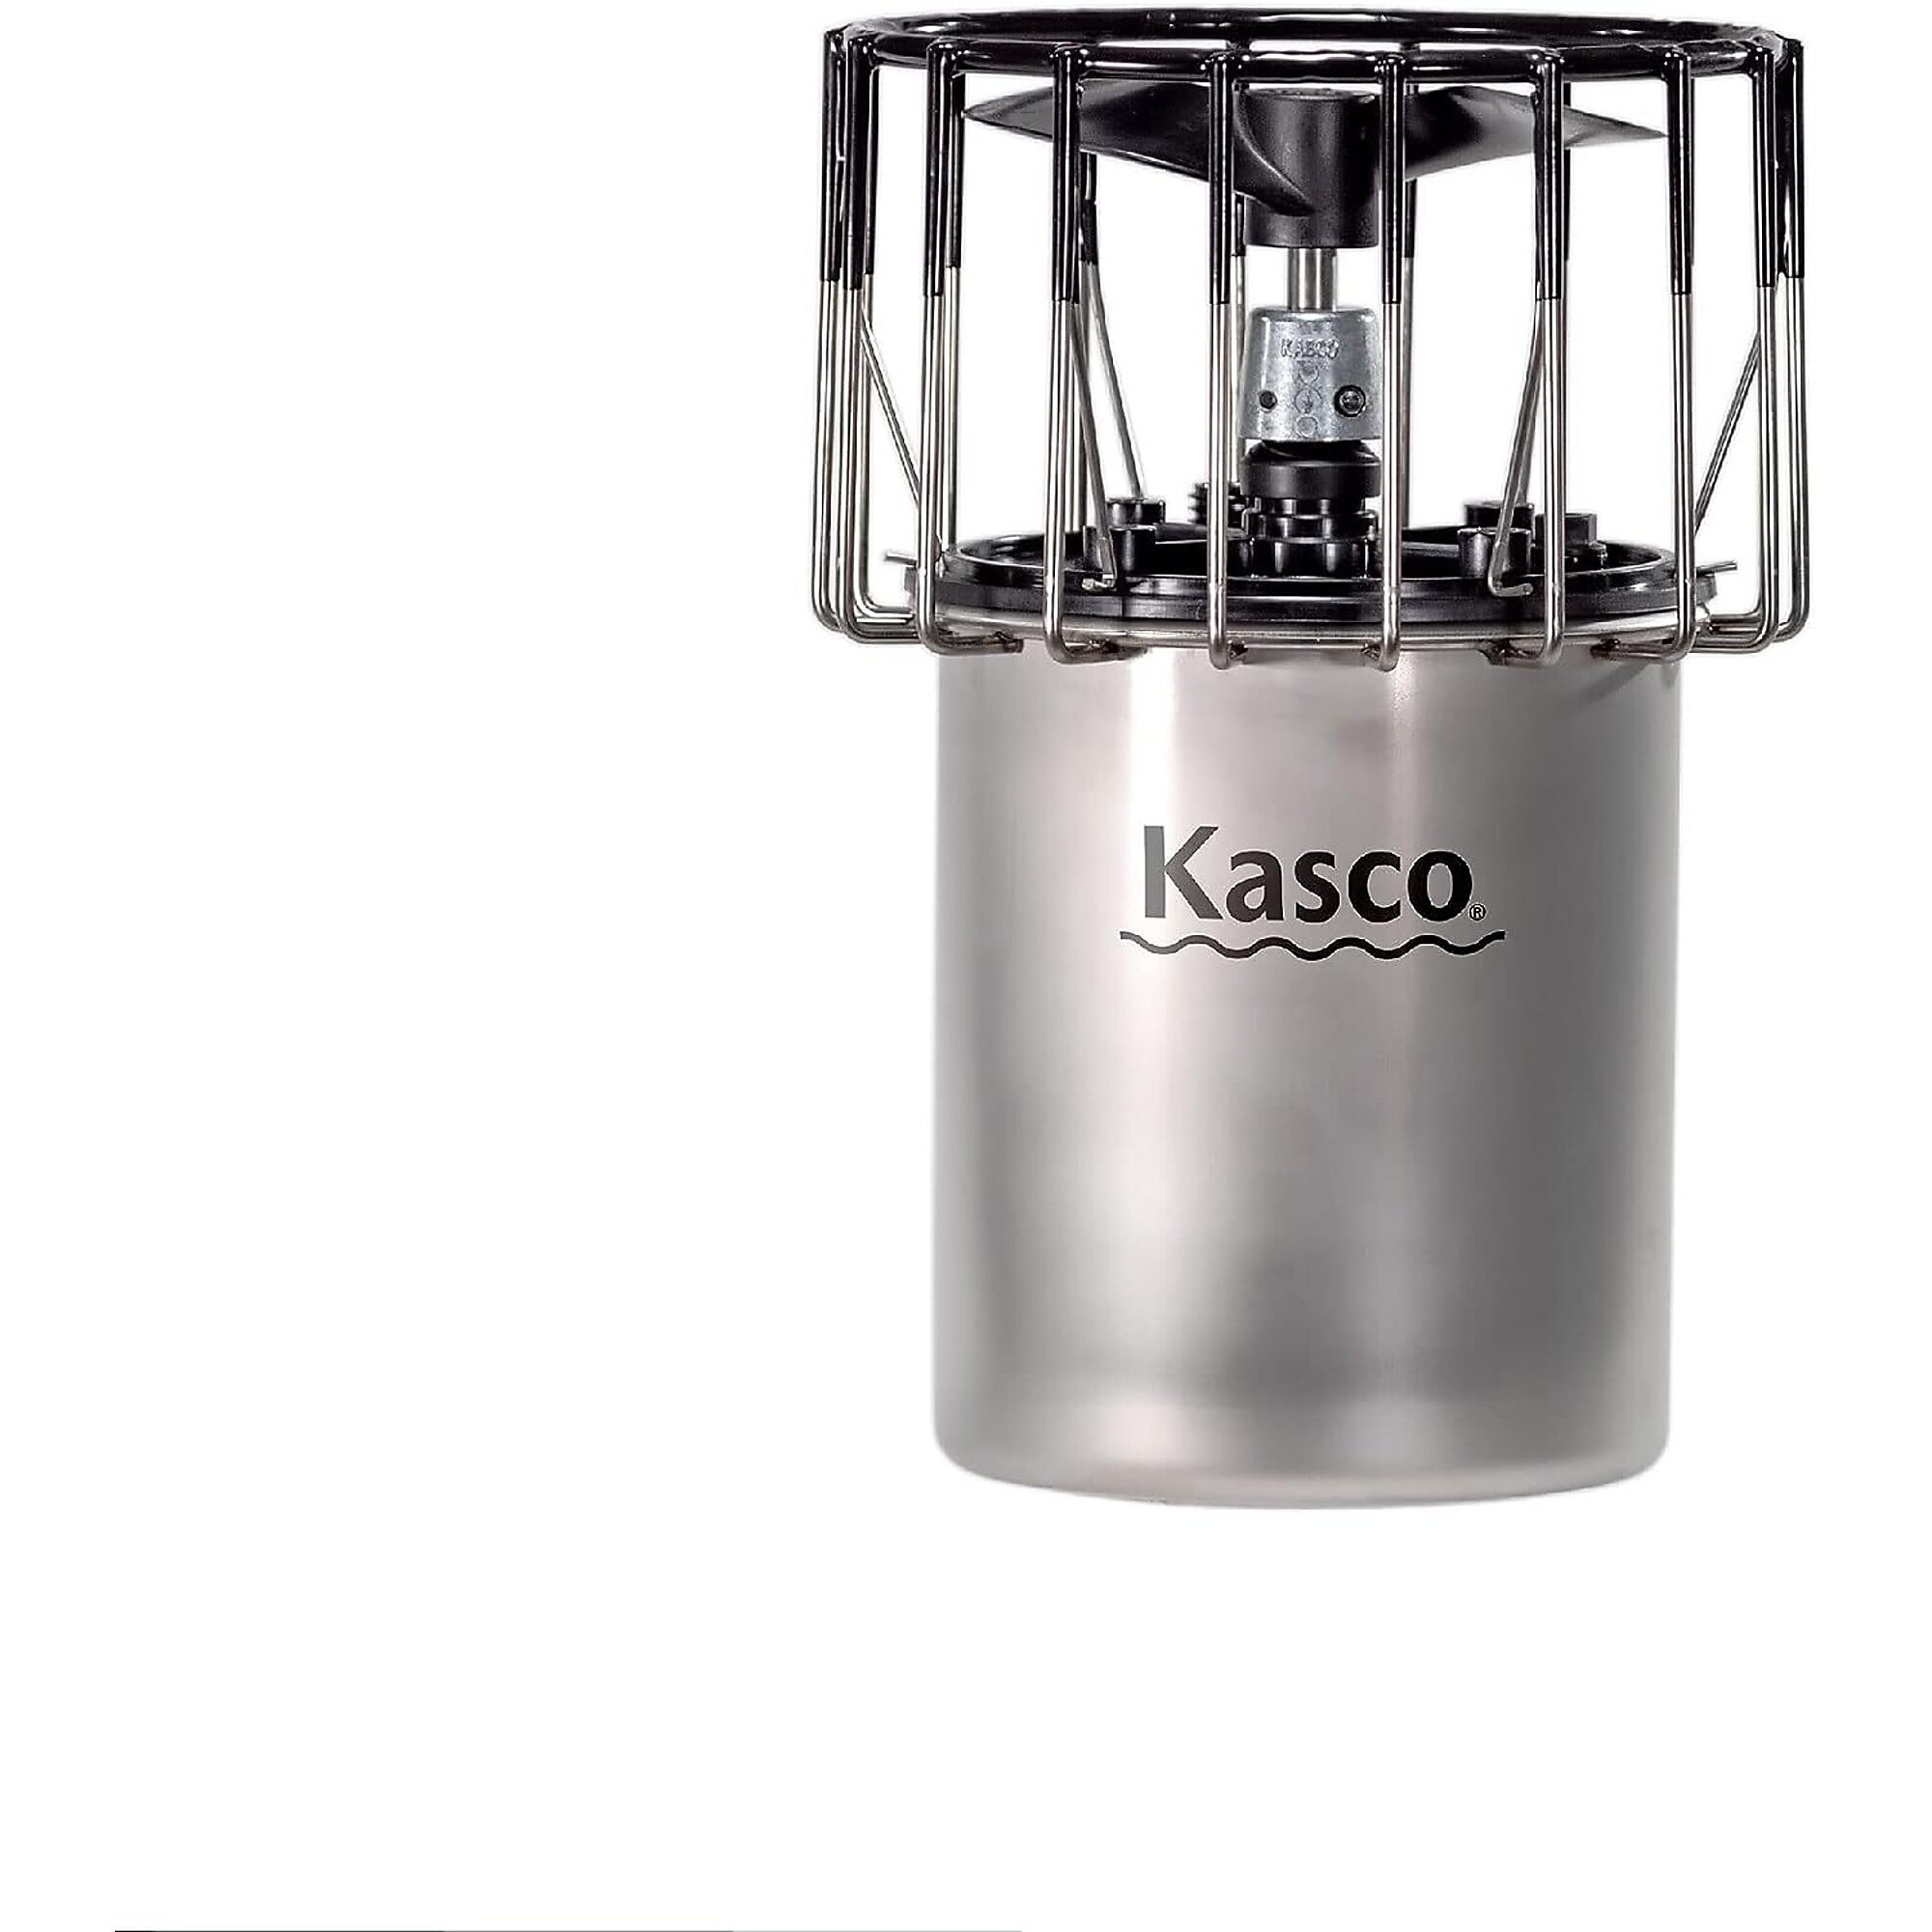 Kasco, De-icer Single for Pond and Lake Bubbler 240V, Volts 120 Horsepower 1 Model 4400HD100